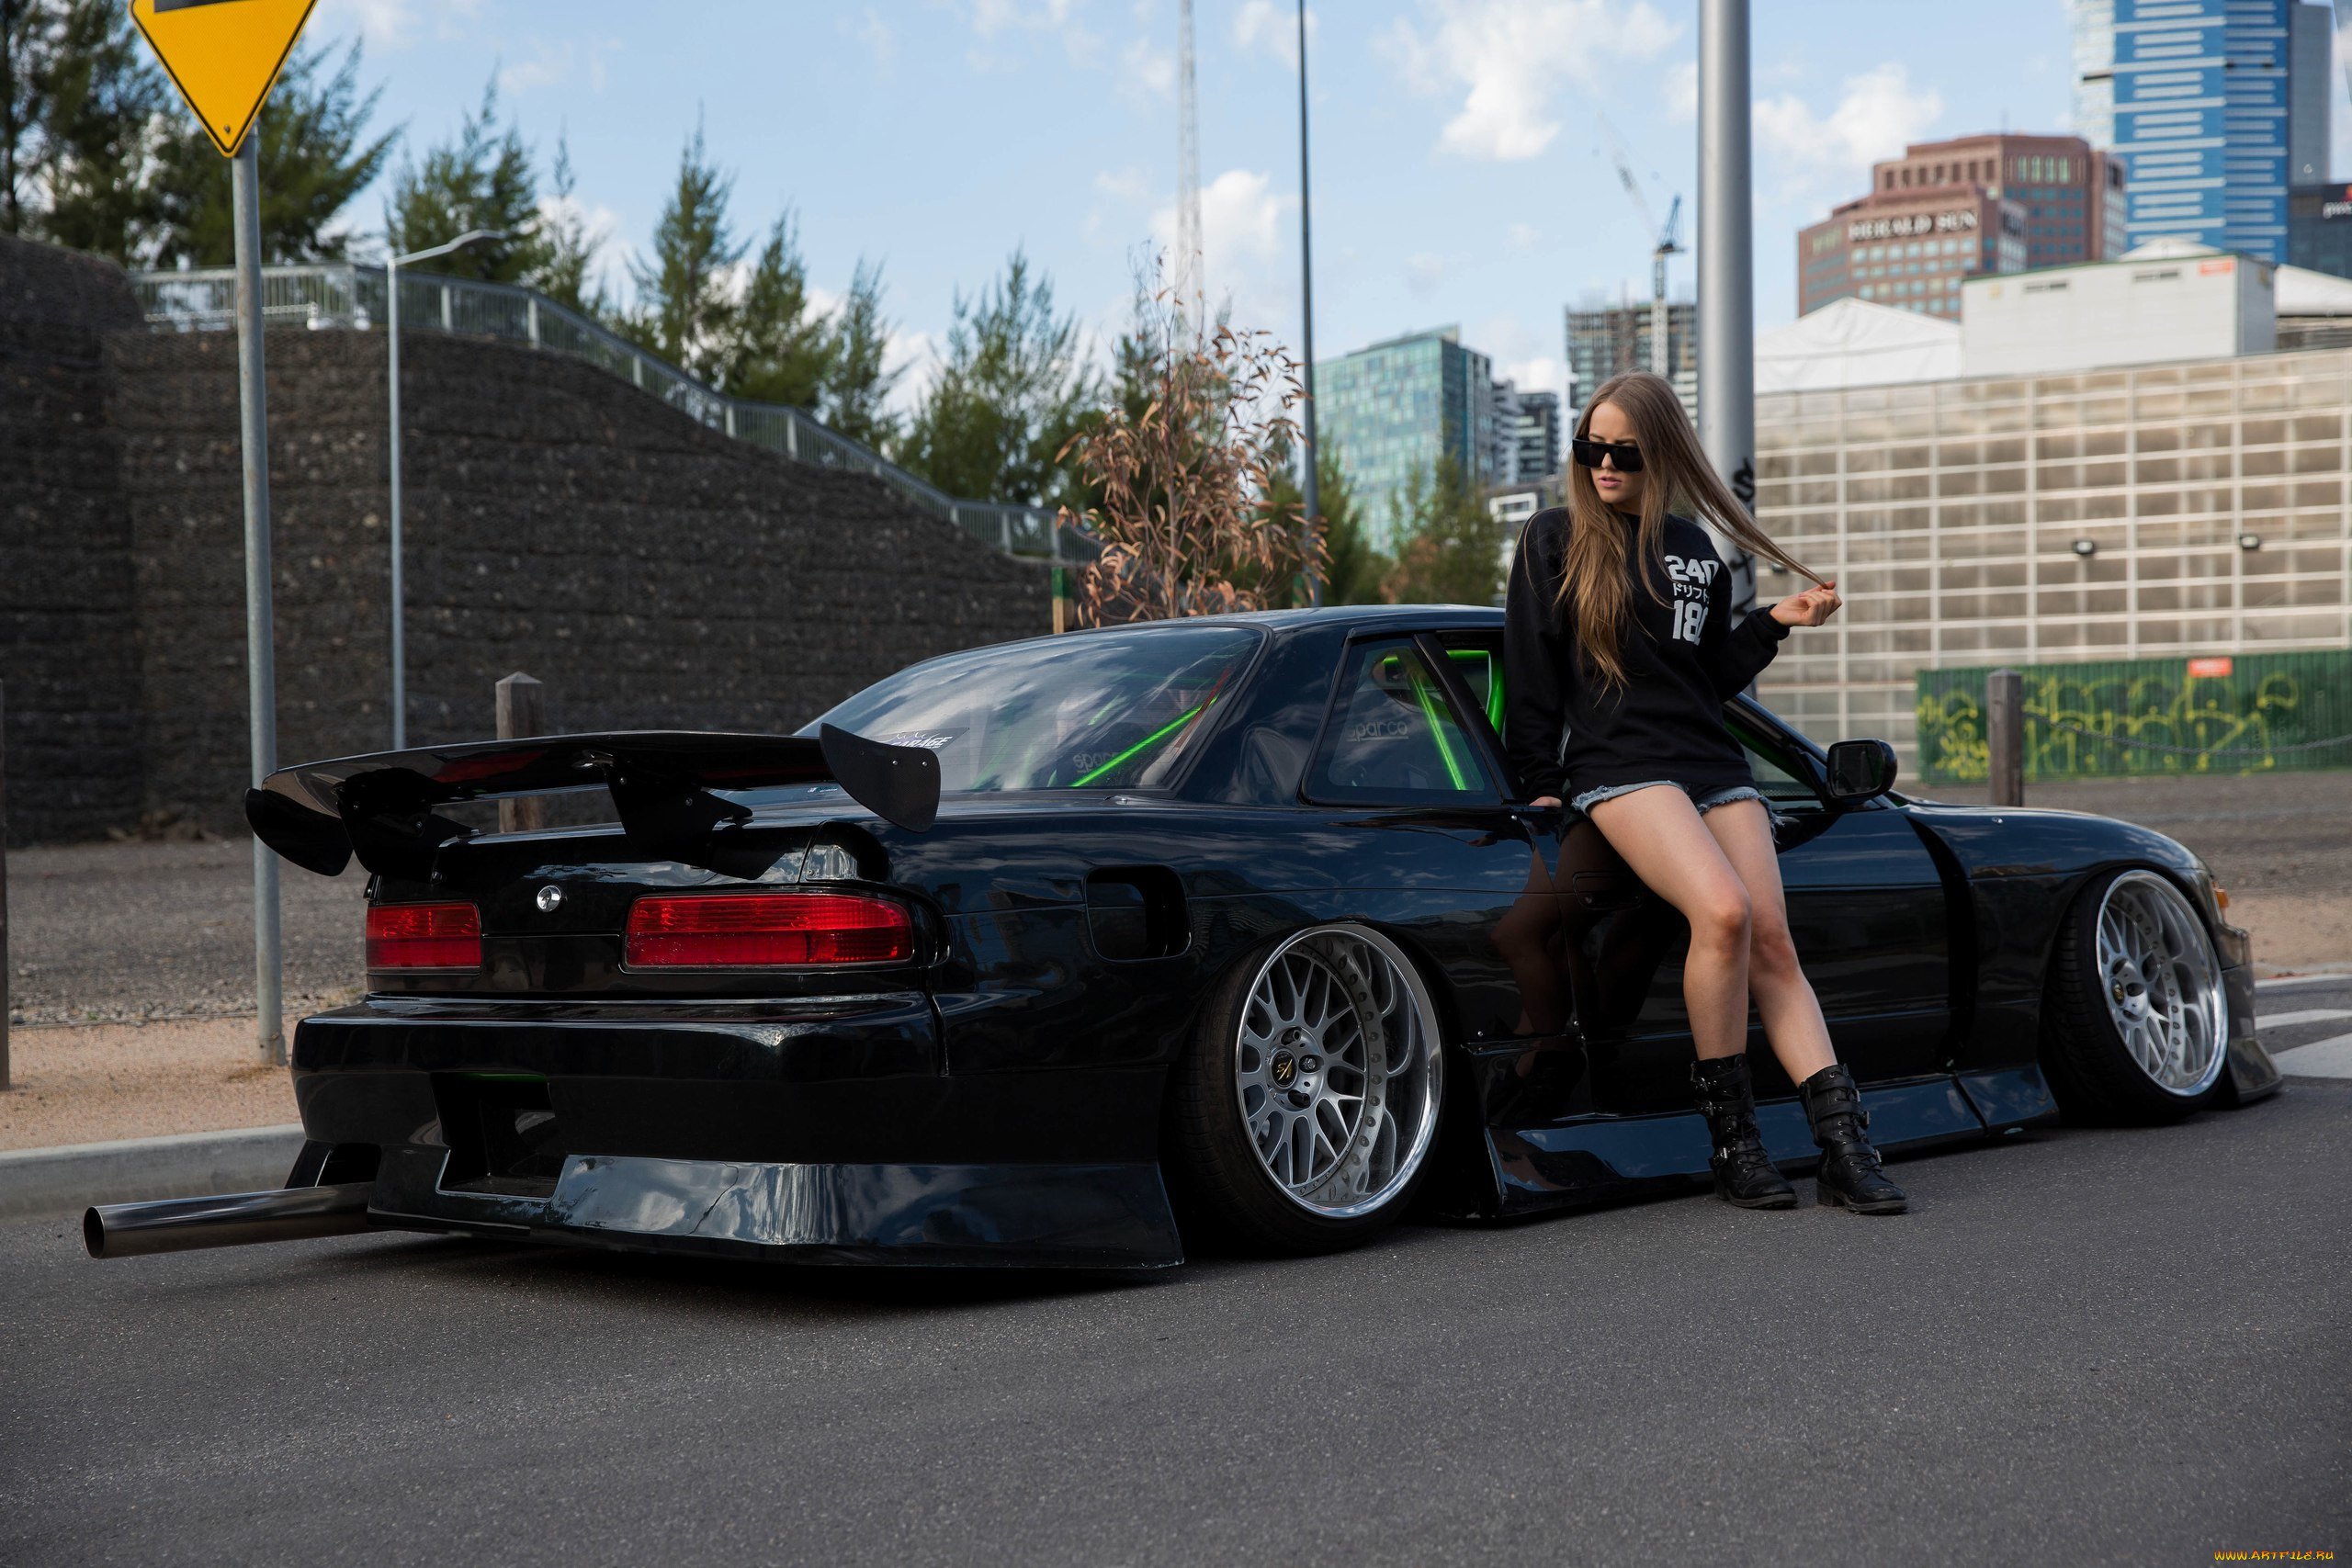 Nissan Silvia s13. Nissan Silvia s13 girl. Nissan s13 JDM. Silvia s13 Black. She fixes cars